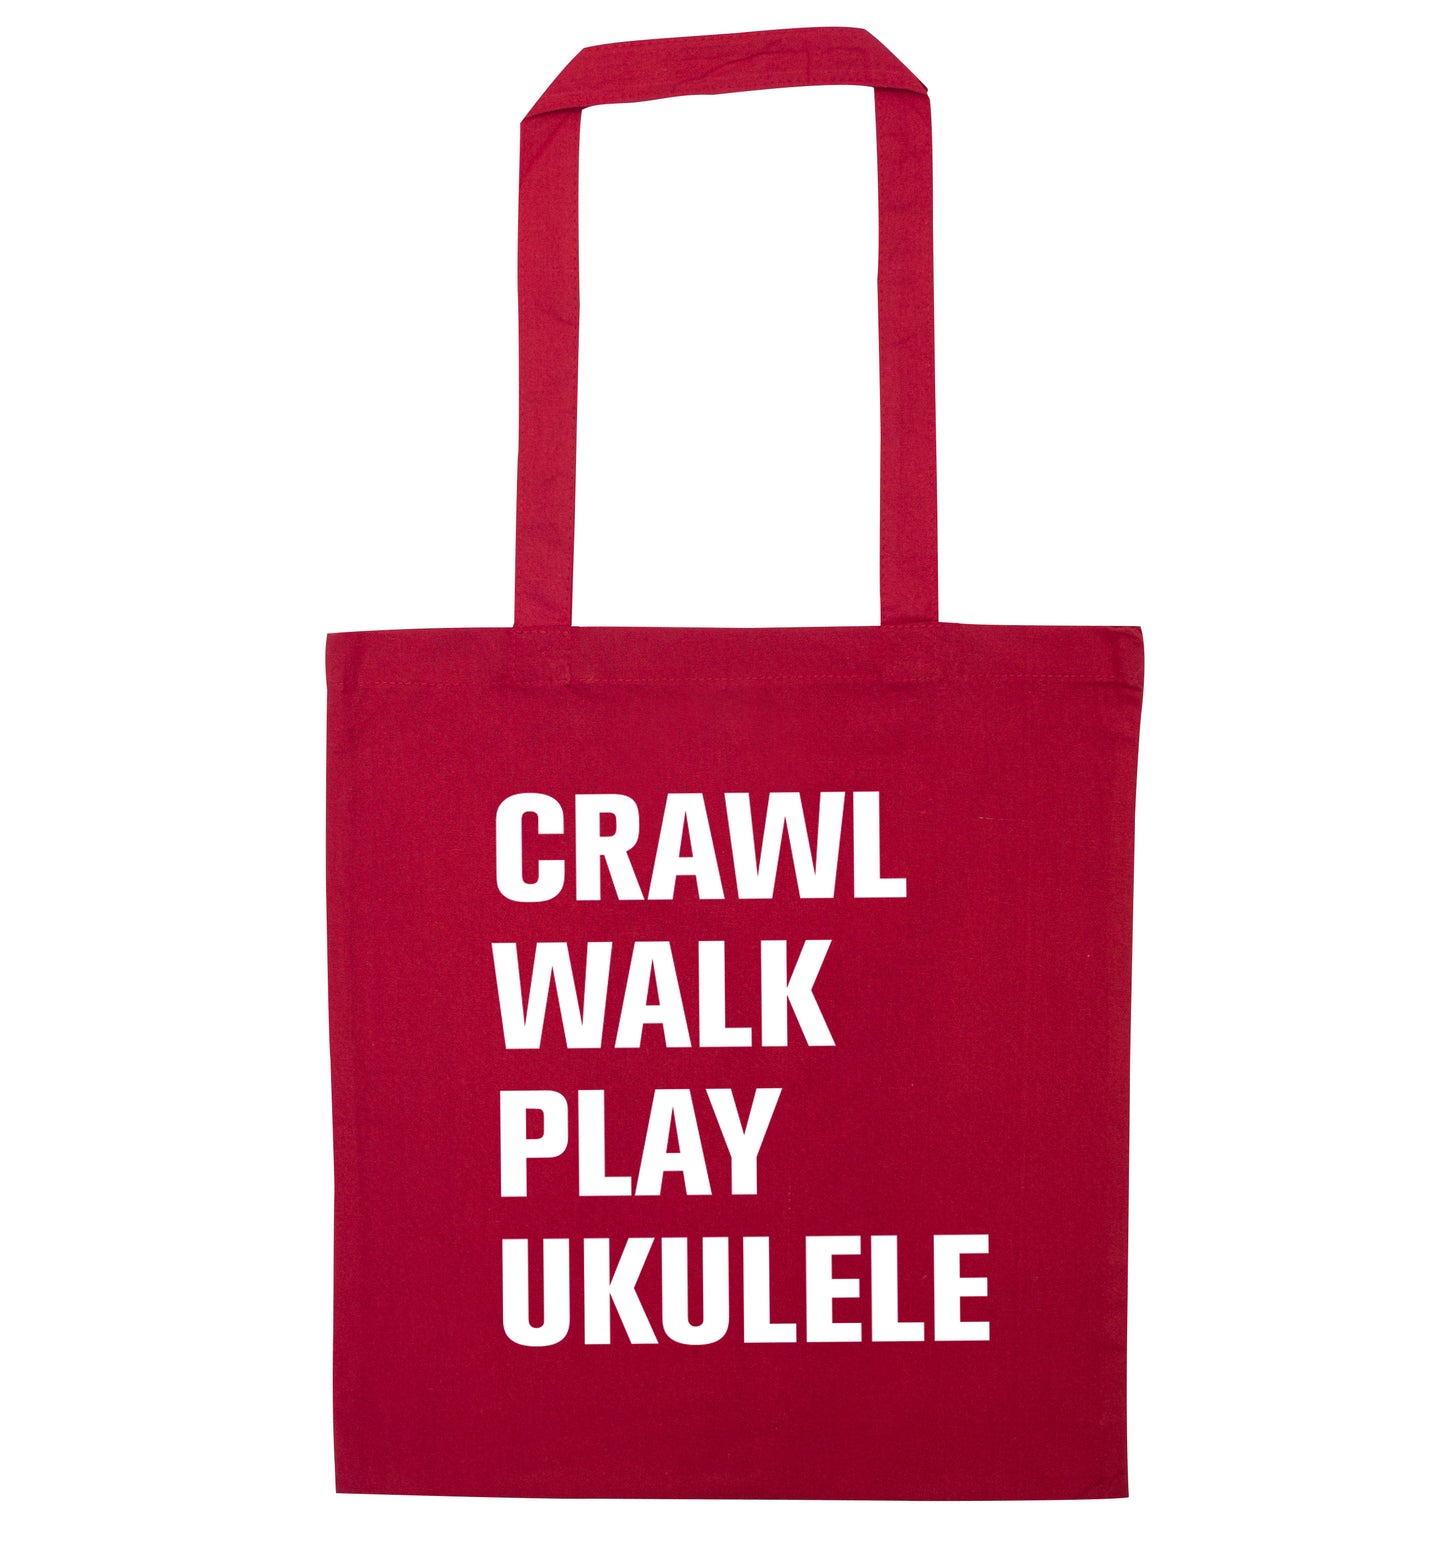 Crawl walk play ukulele red tote bag